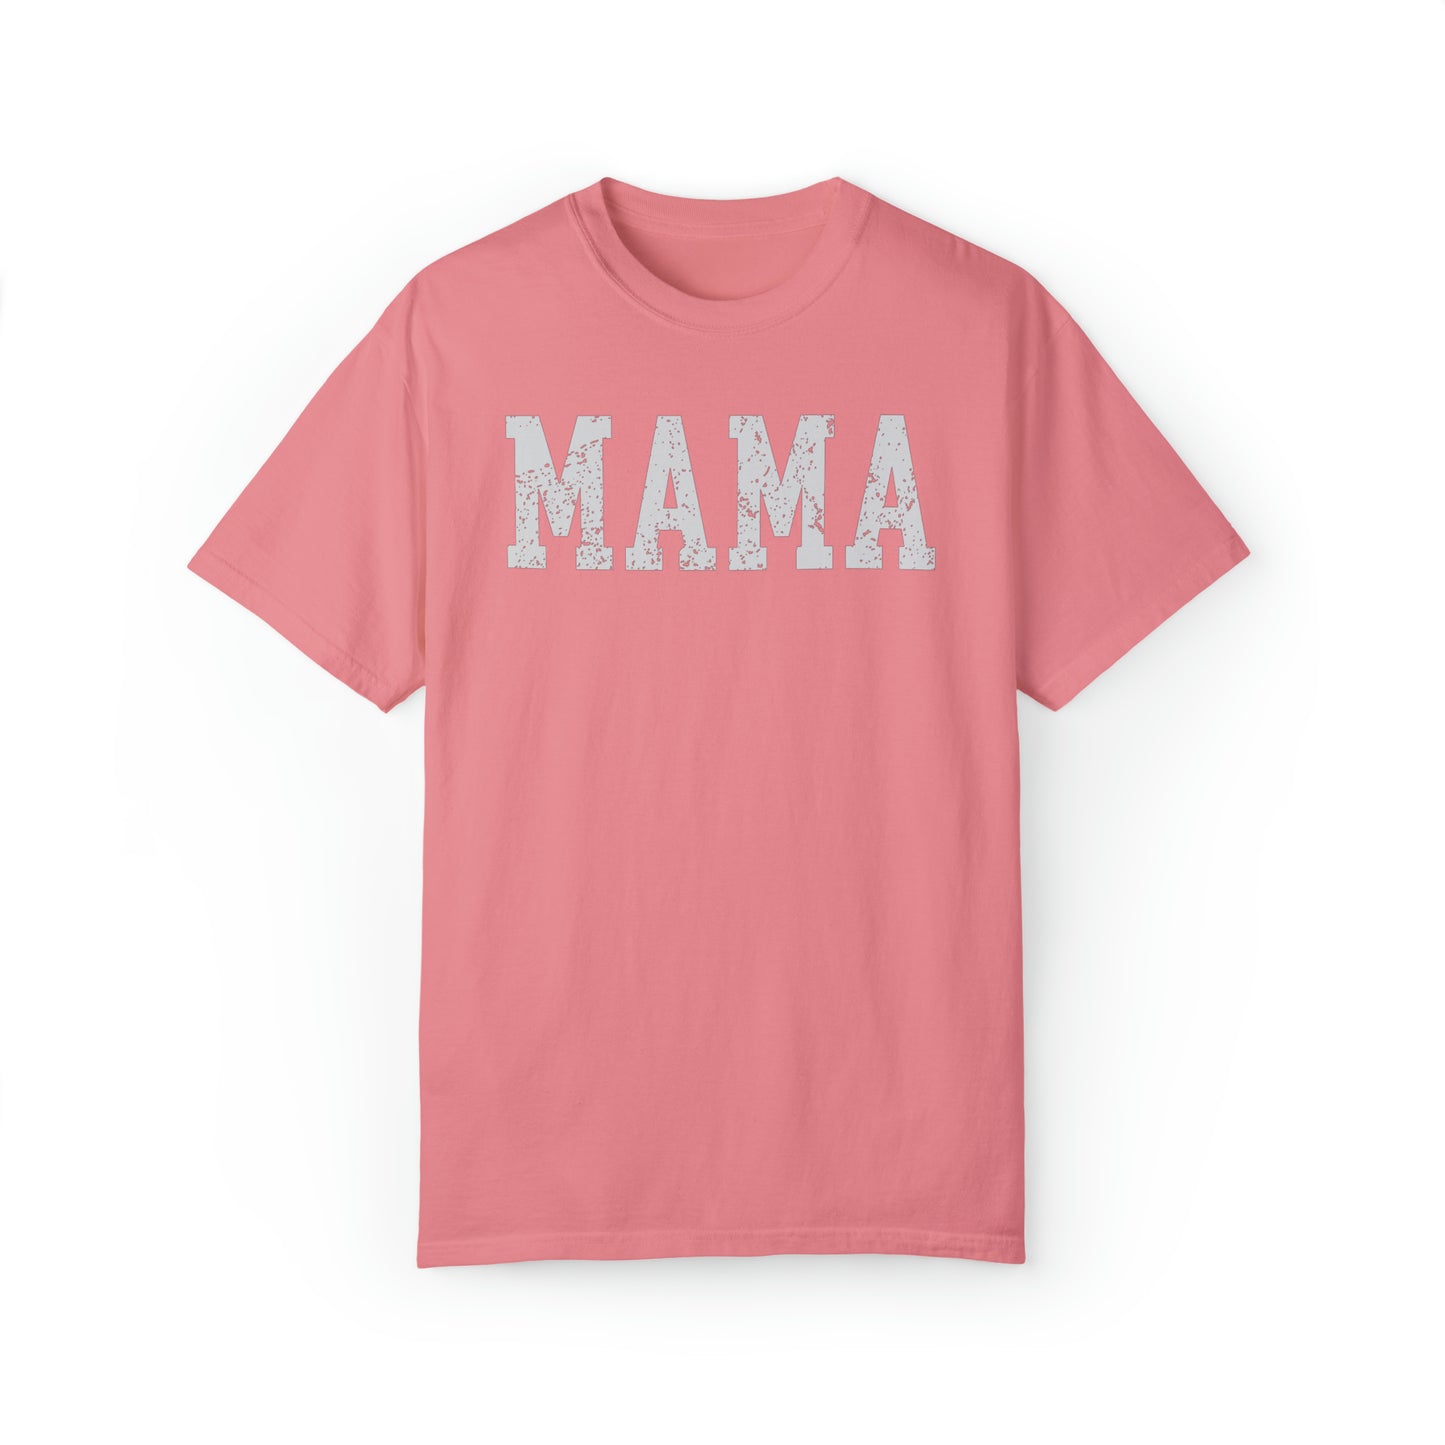 Mama Mom Mother Graphic T-Shirt, Comfort Colors Crewneck Shirt, Gift for Mom Grandma, New Mom Shirt, Baby Shower Gift